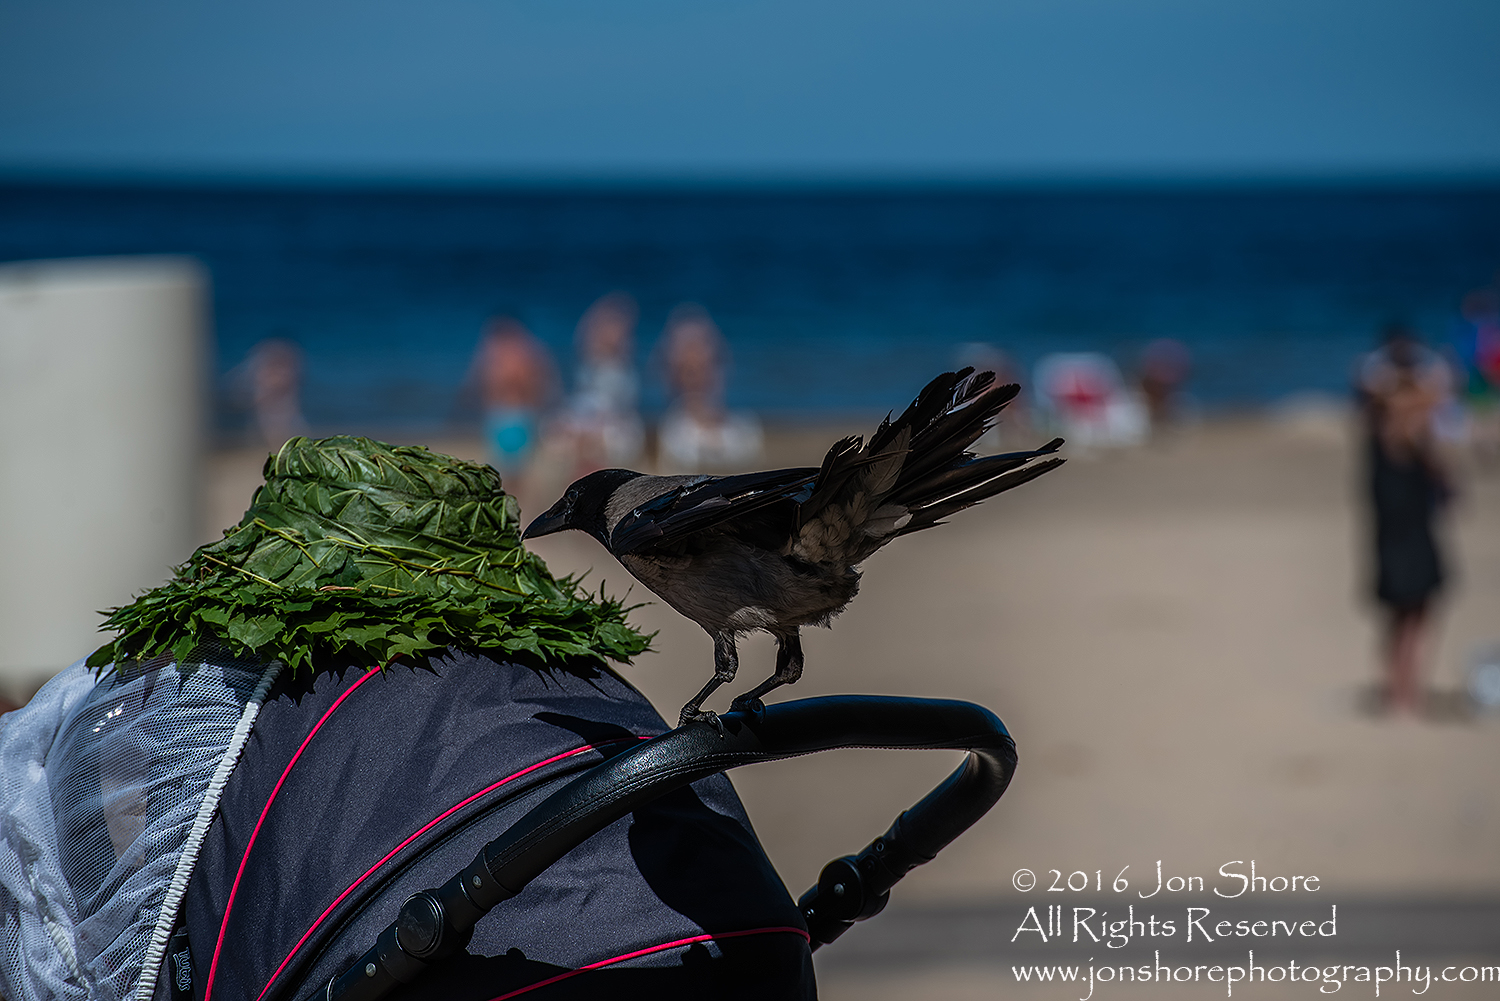 Black headed crow and grass hat Jurmala, Latvia. Tamron 300mm